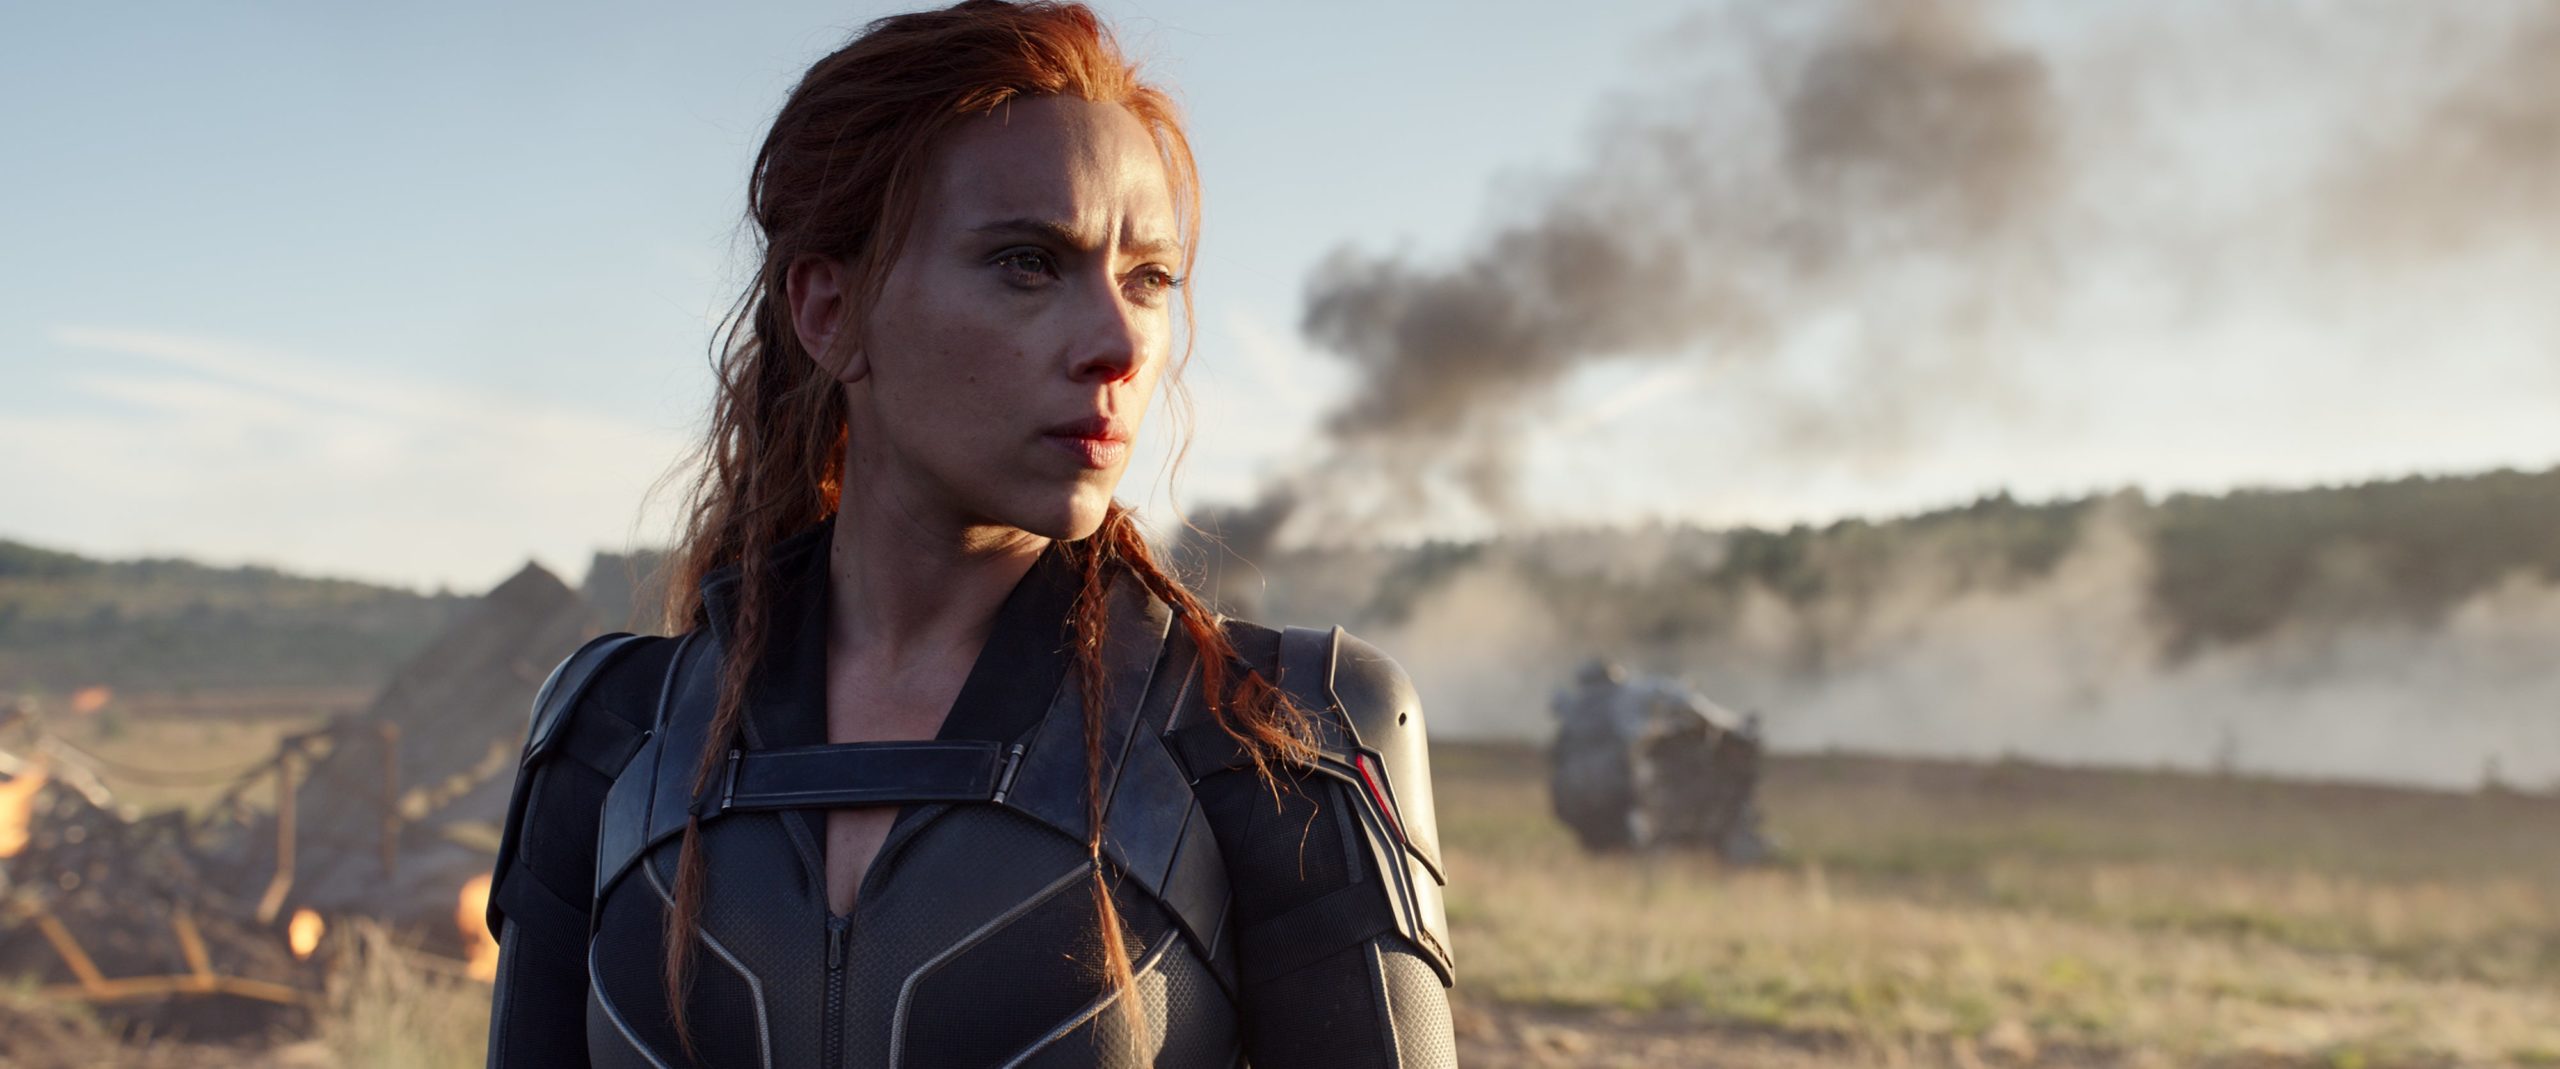 Scarlett Johansson in Black Widow (Image: Marvel Studios)